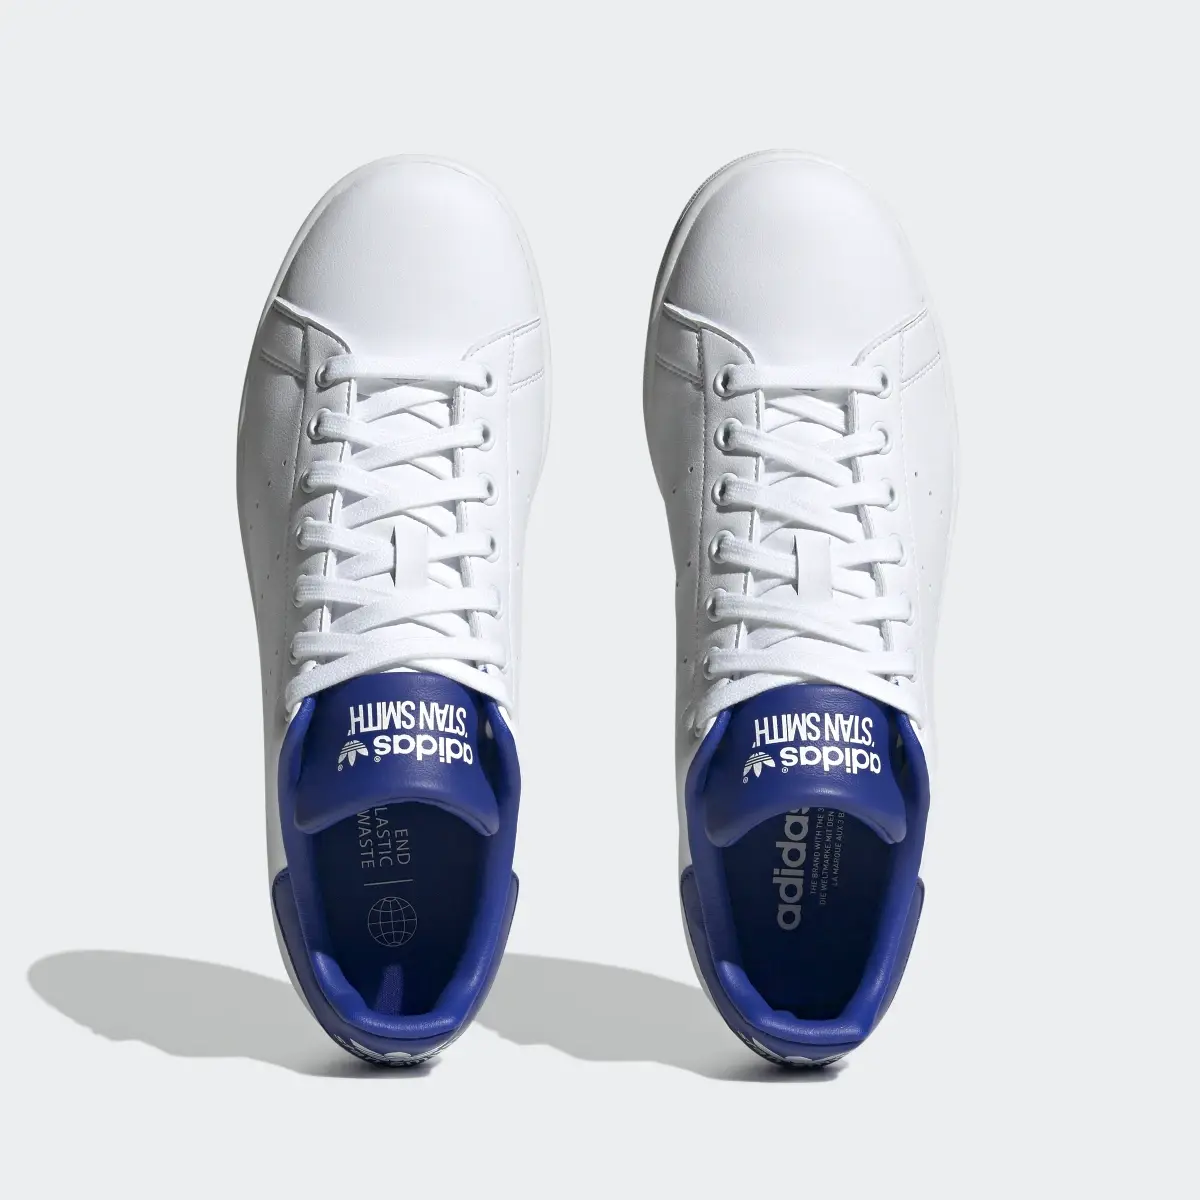 Adidas Scarpe Stan Smith. 3